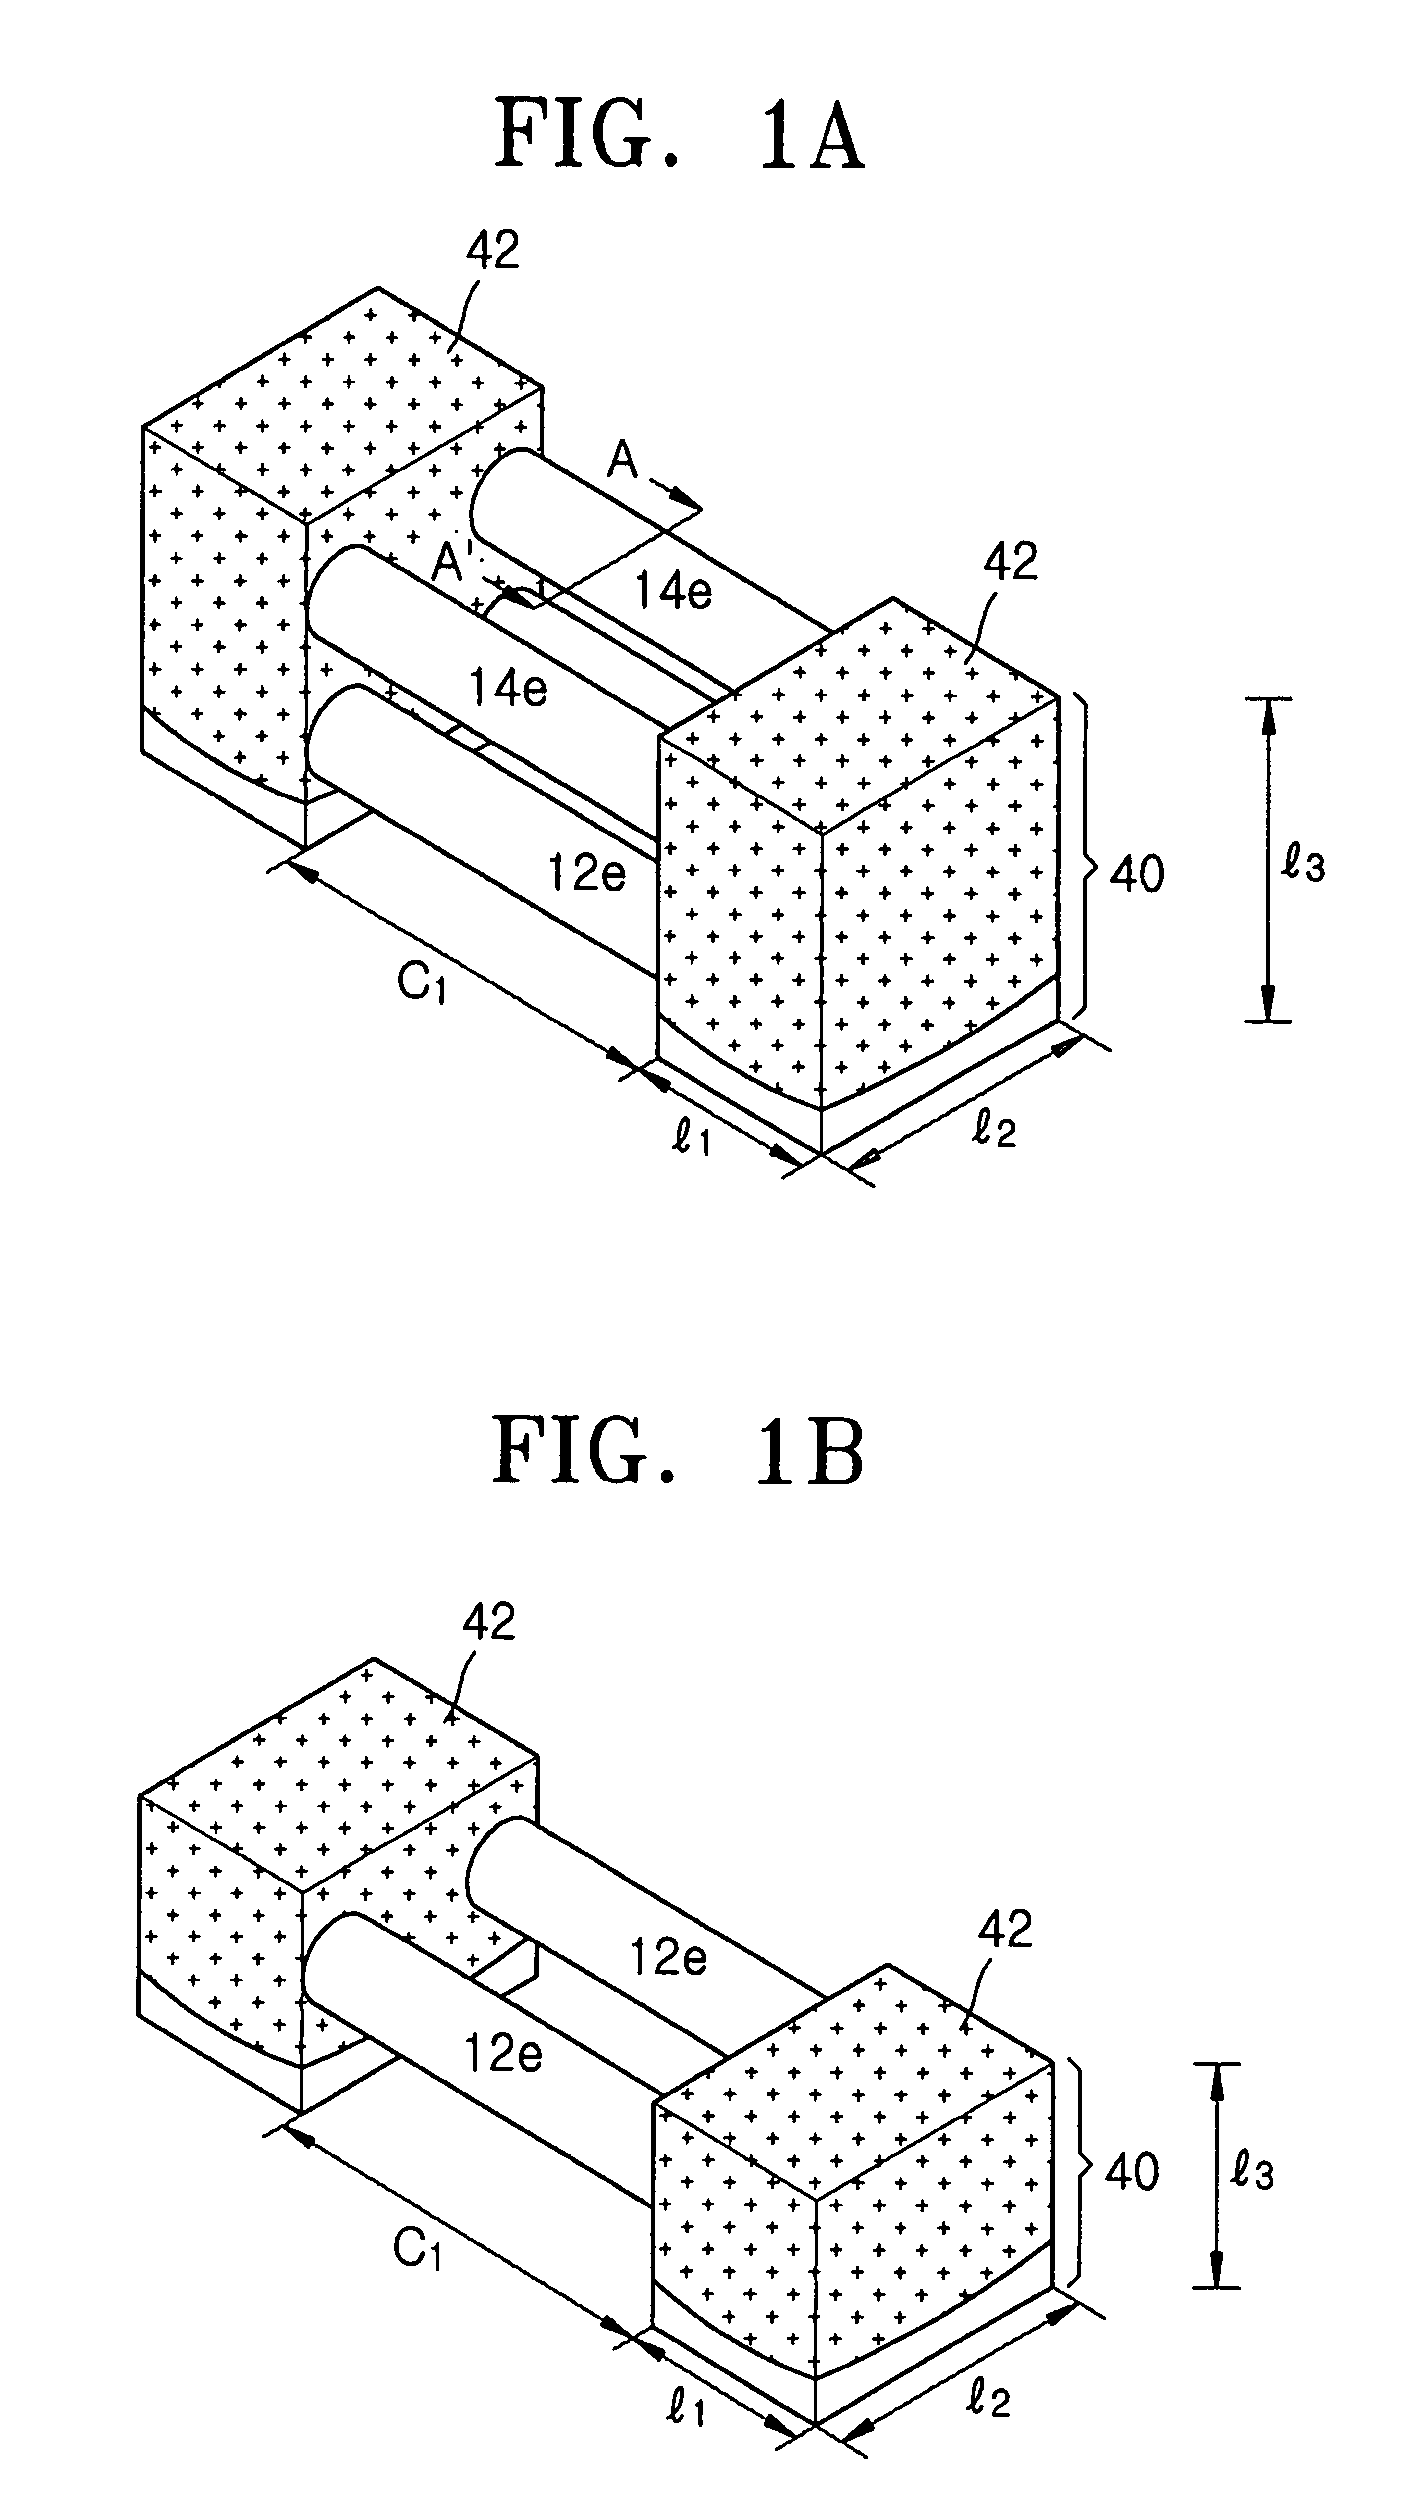 Method of fabricating field effect transistor (FET) having wire channels